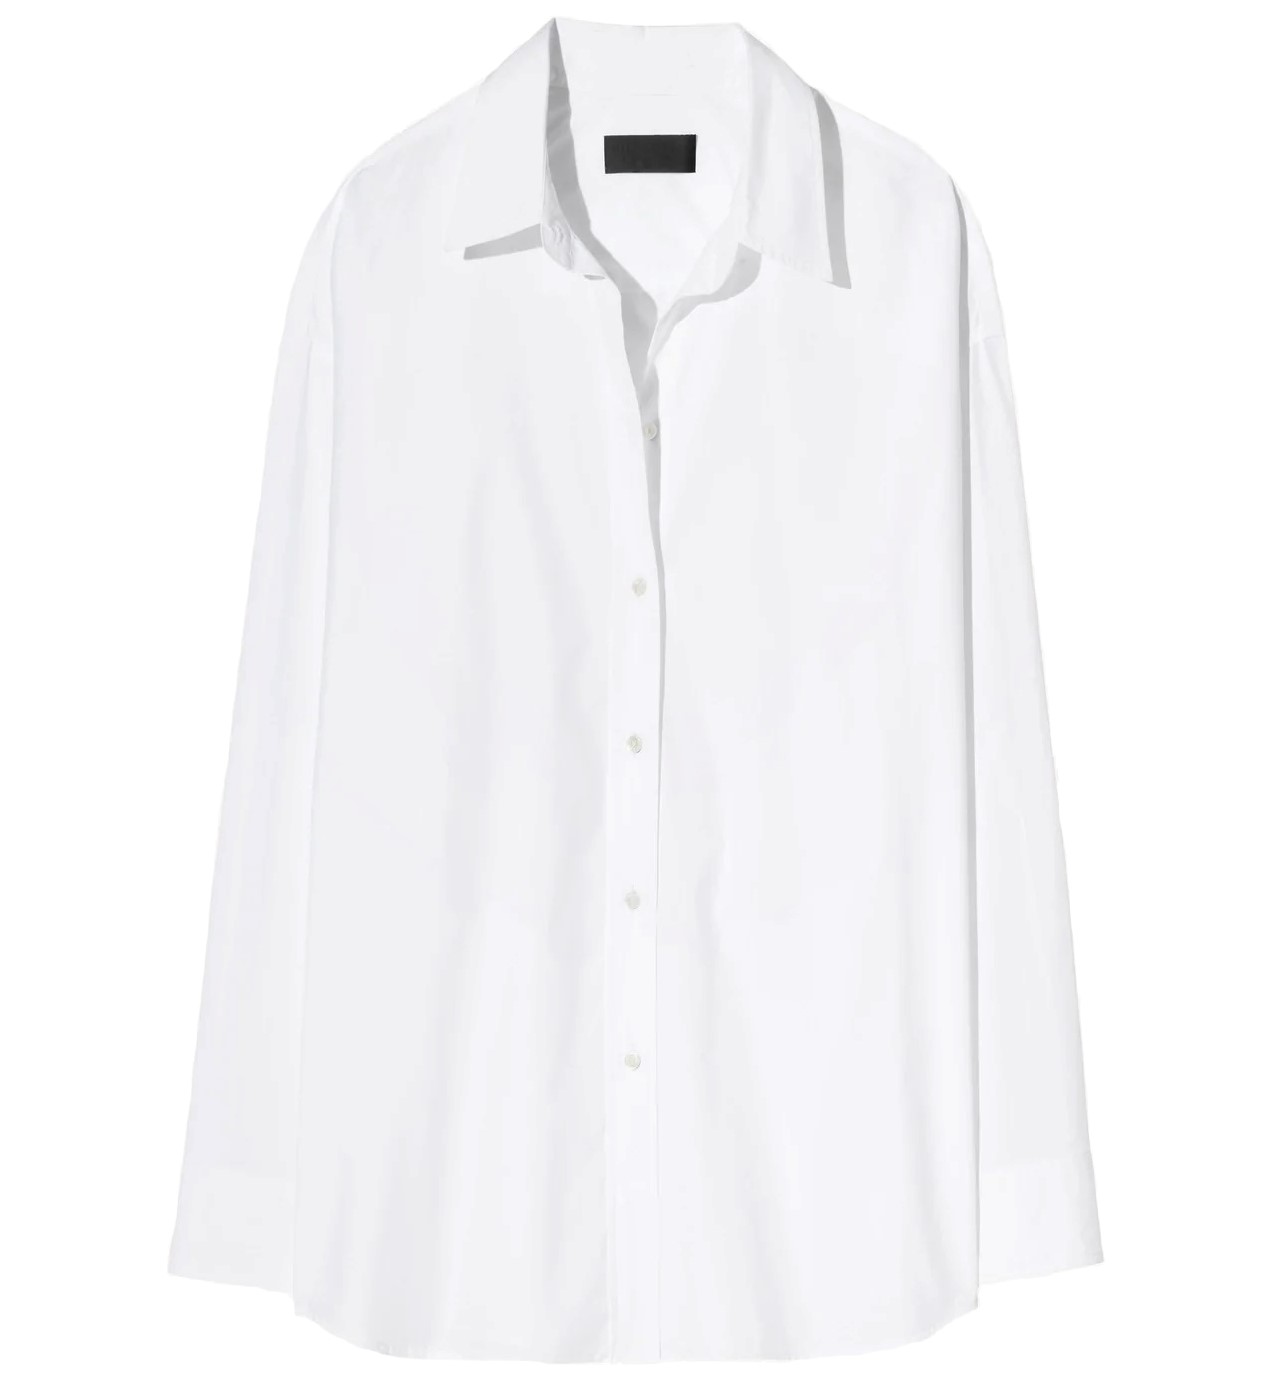 NILI LOTAN Mael Oversized Shirt in White S